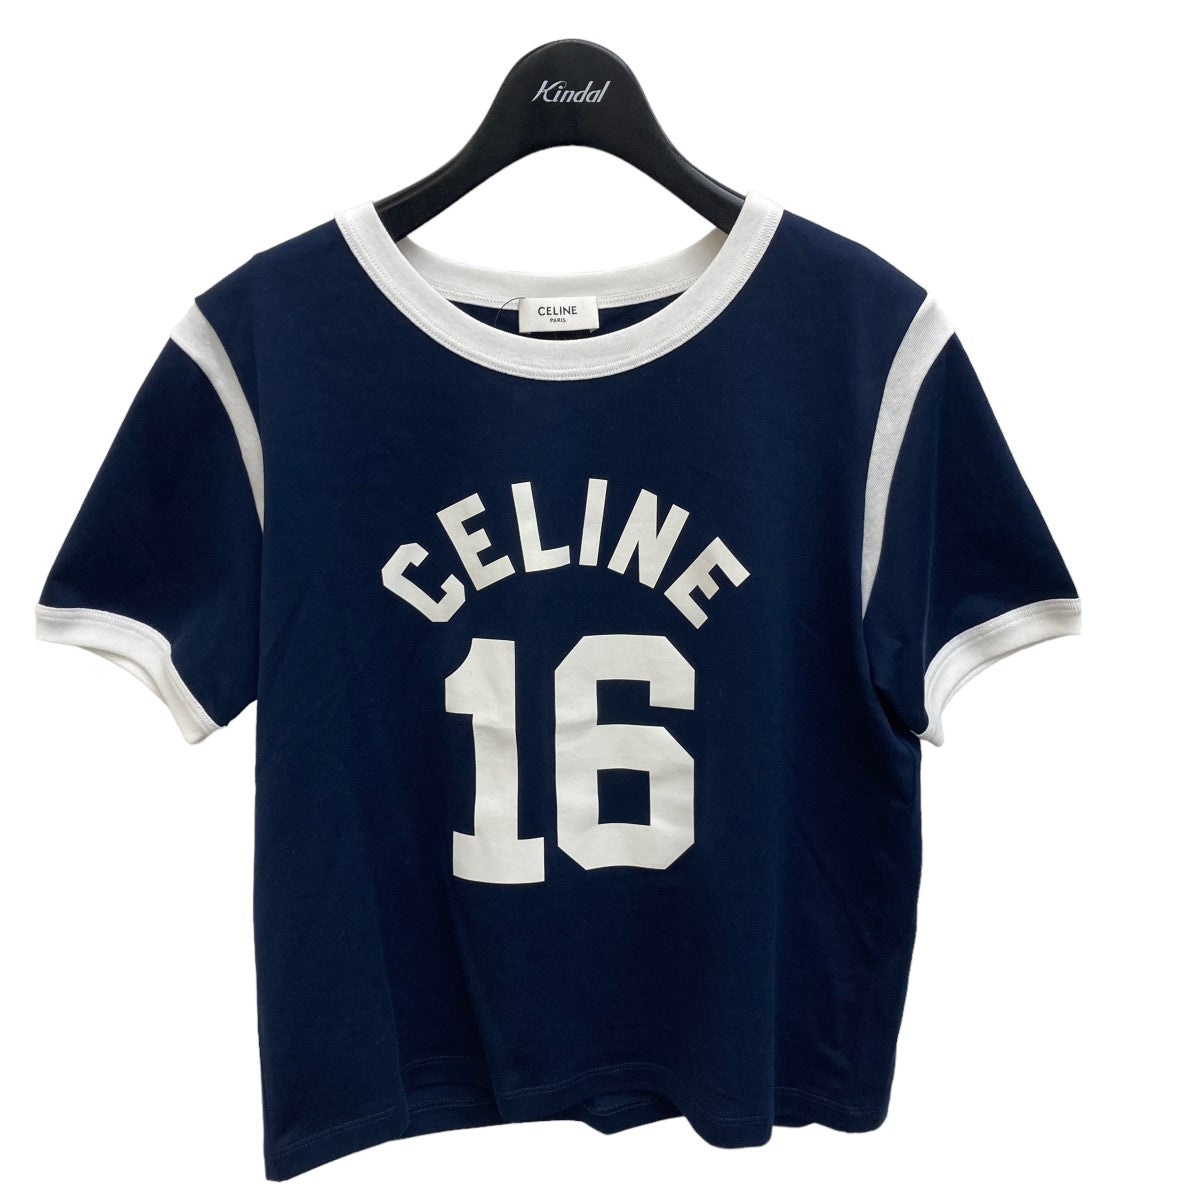 CELINE(セリーヌ) 16ボクシーTシャツ 2X54B671Q ネイビー サイズ S｜【公式】カインドオルオンライン  ブランド古着・中古通販【kindal】